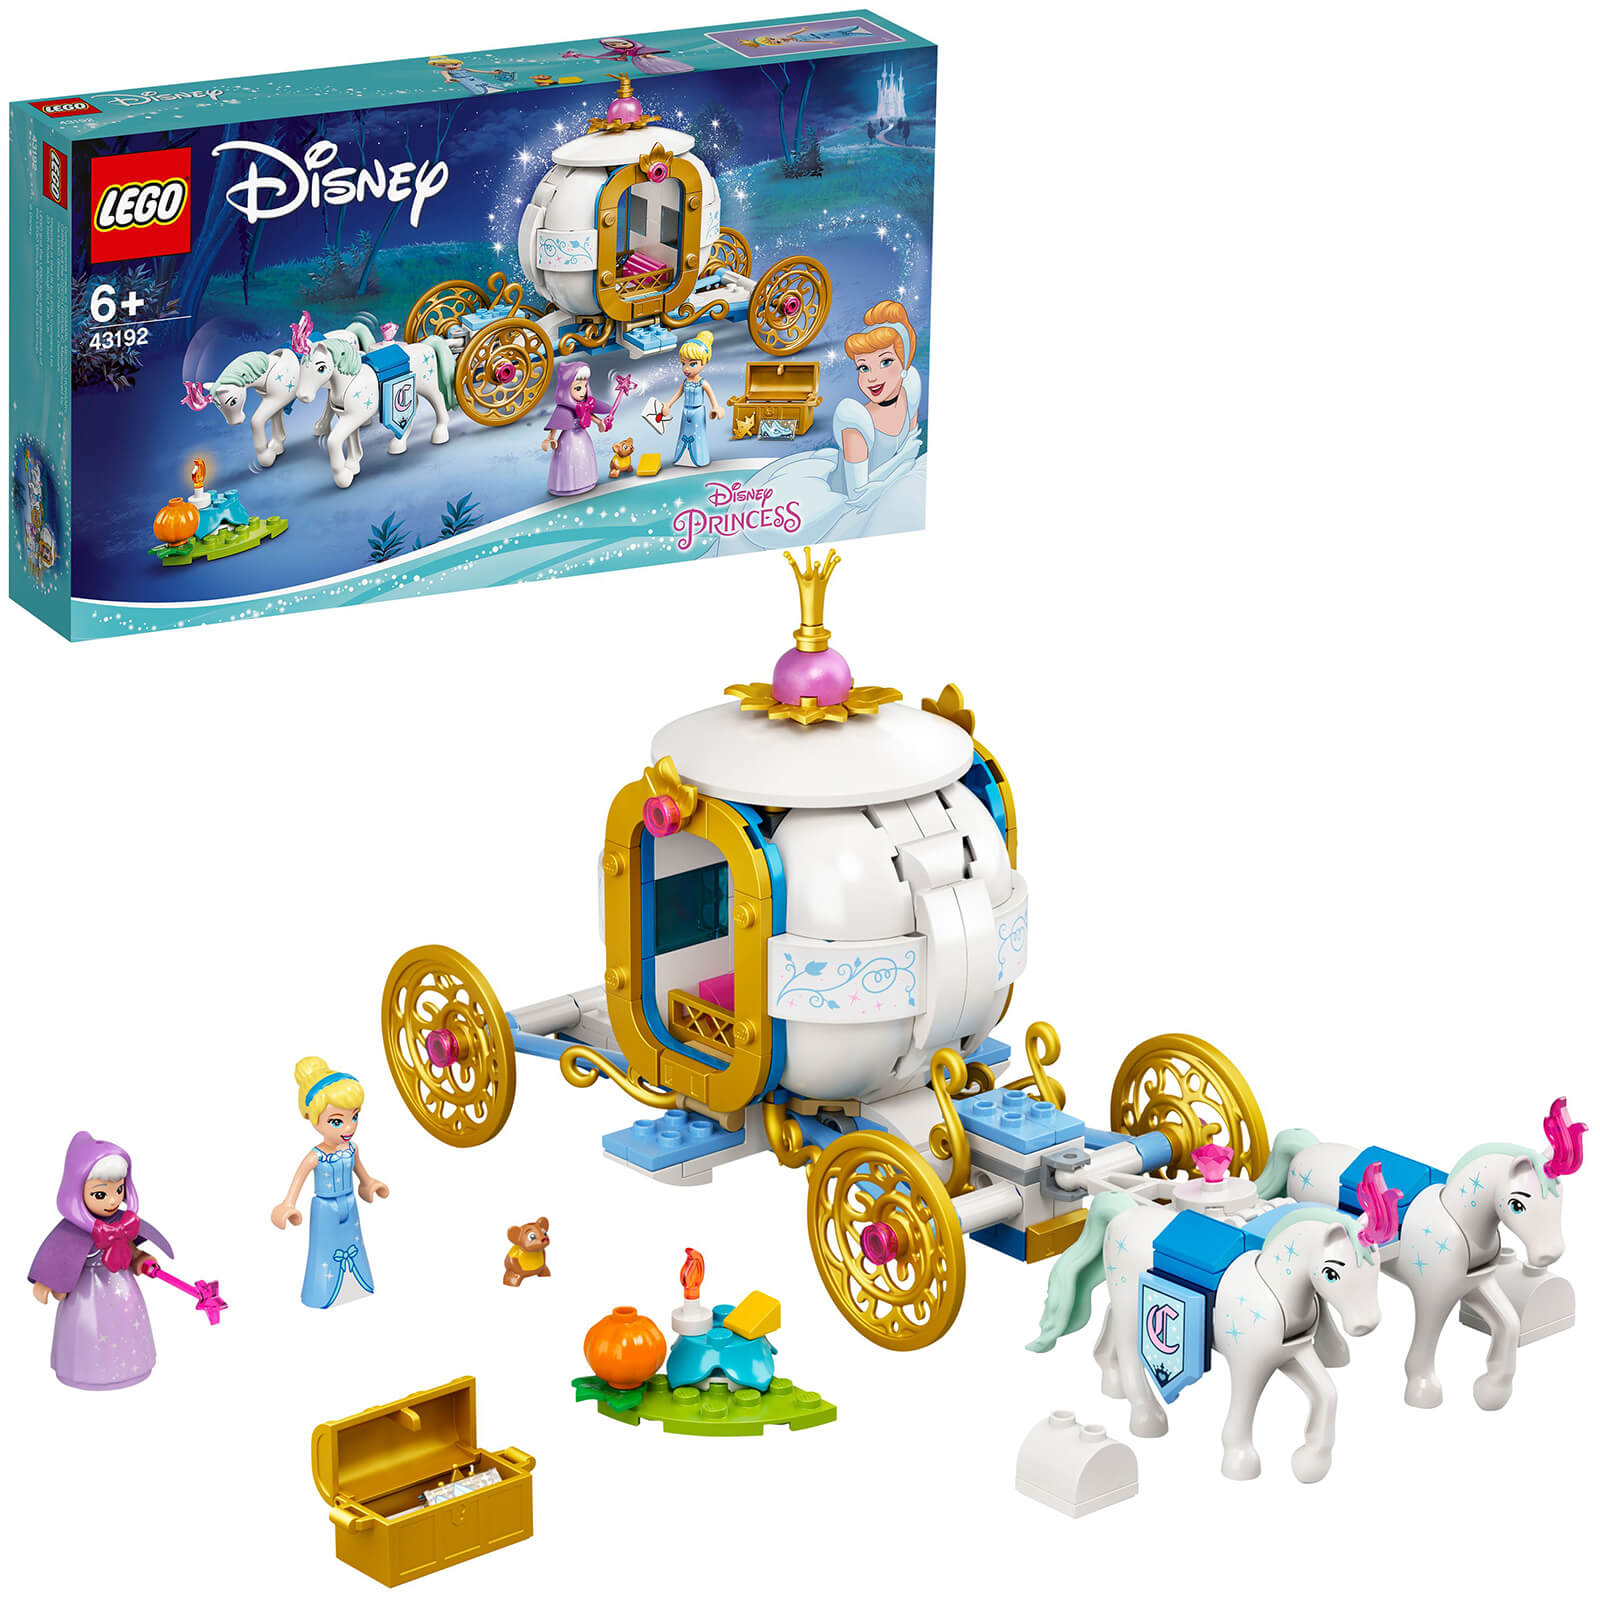 LEGO Disney Princess: Cinderella's Royal Carriage (43192)